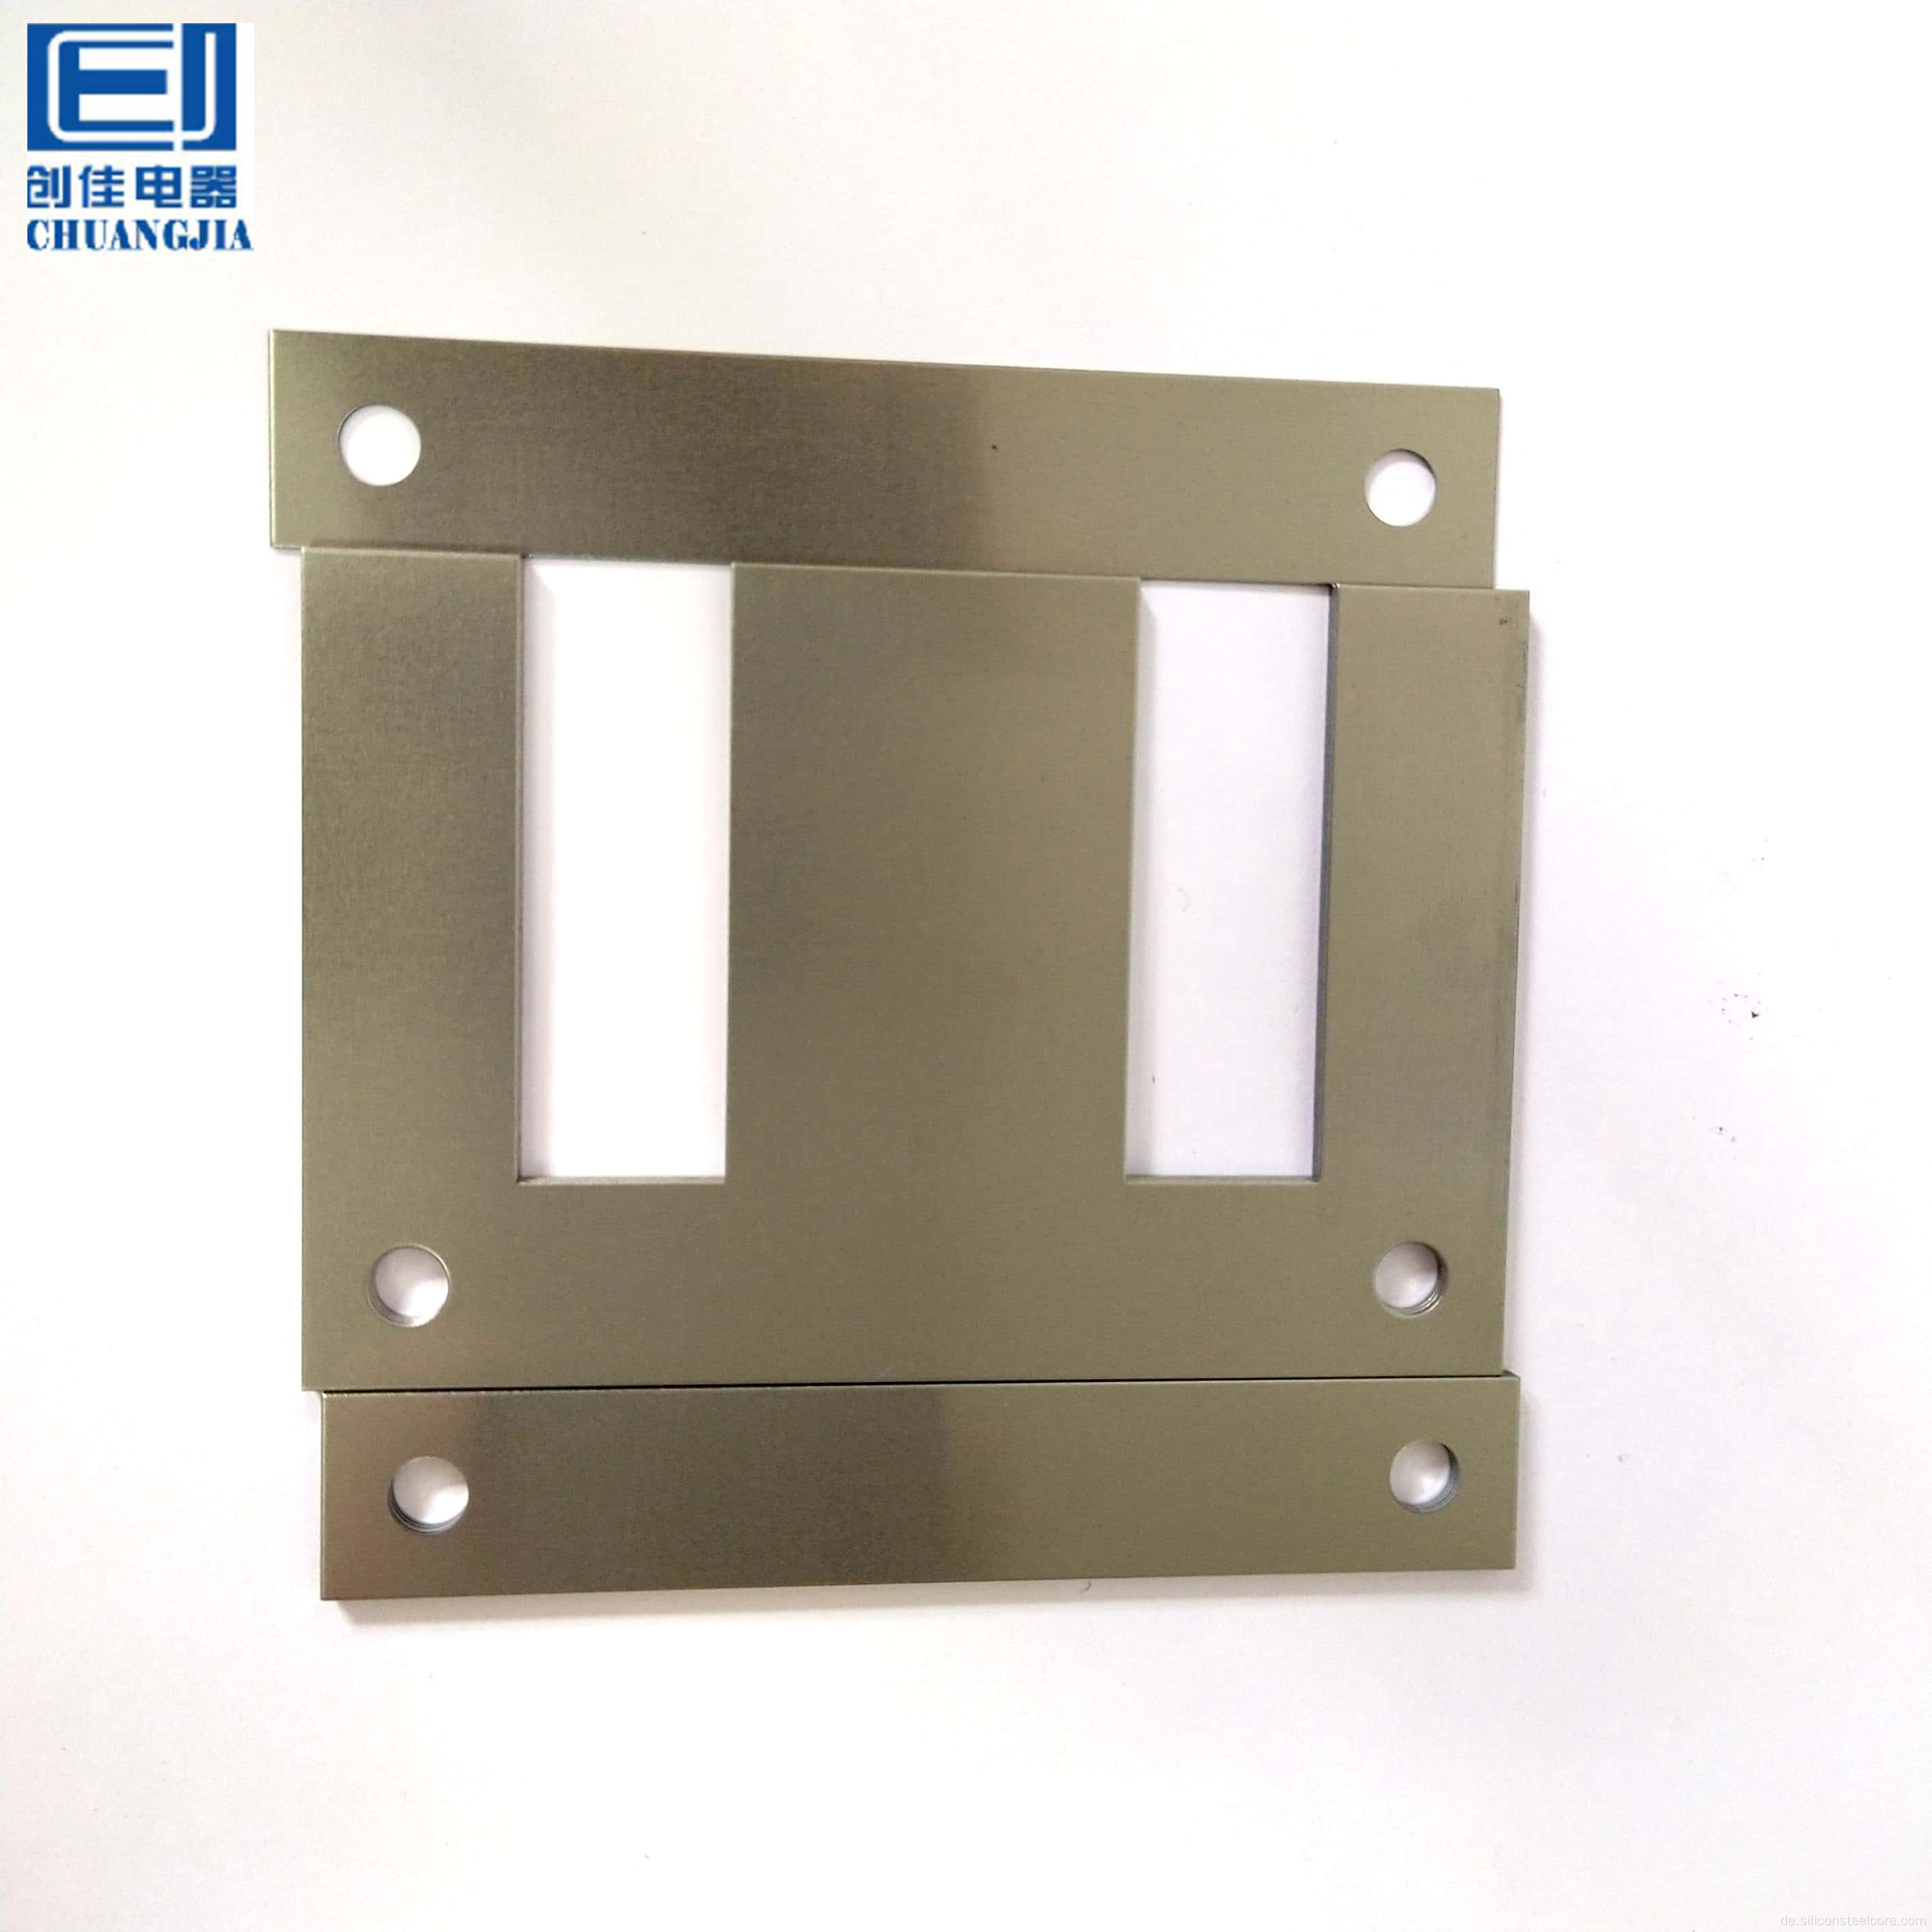 Elektrogut-EI-Transformatorkerndichtung, Dicke: 0,25-0,50 mm/Laminat für Transformator/Siliziumkernstahl